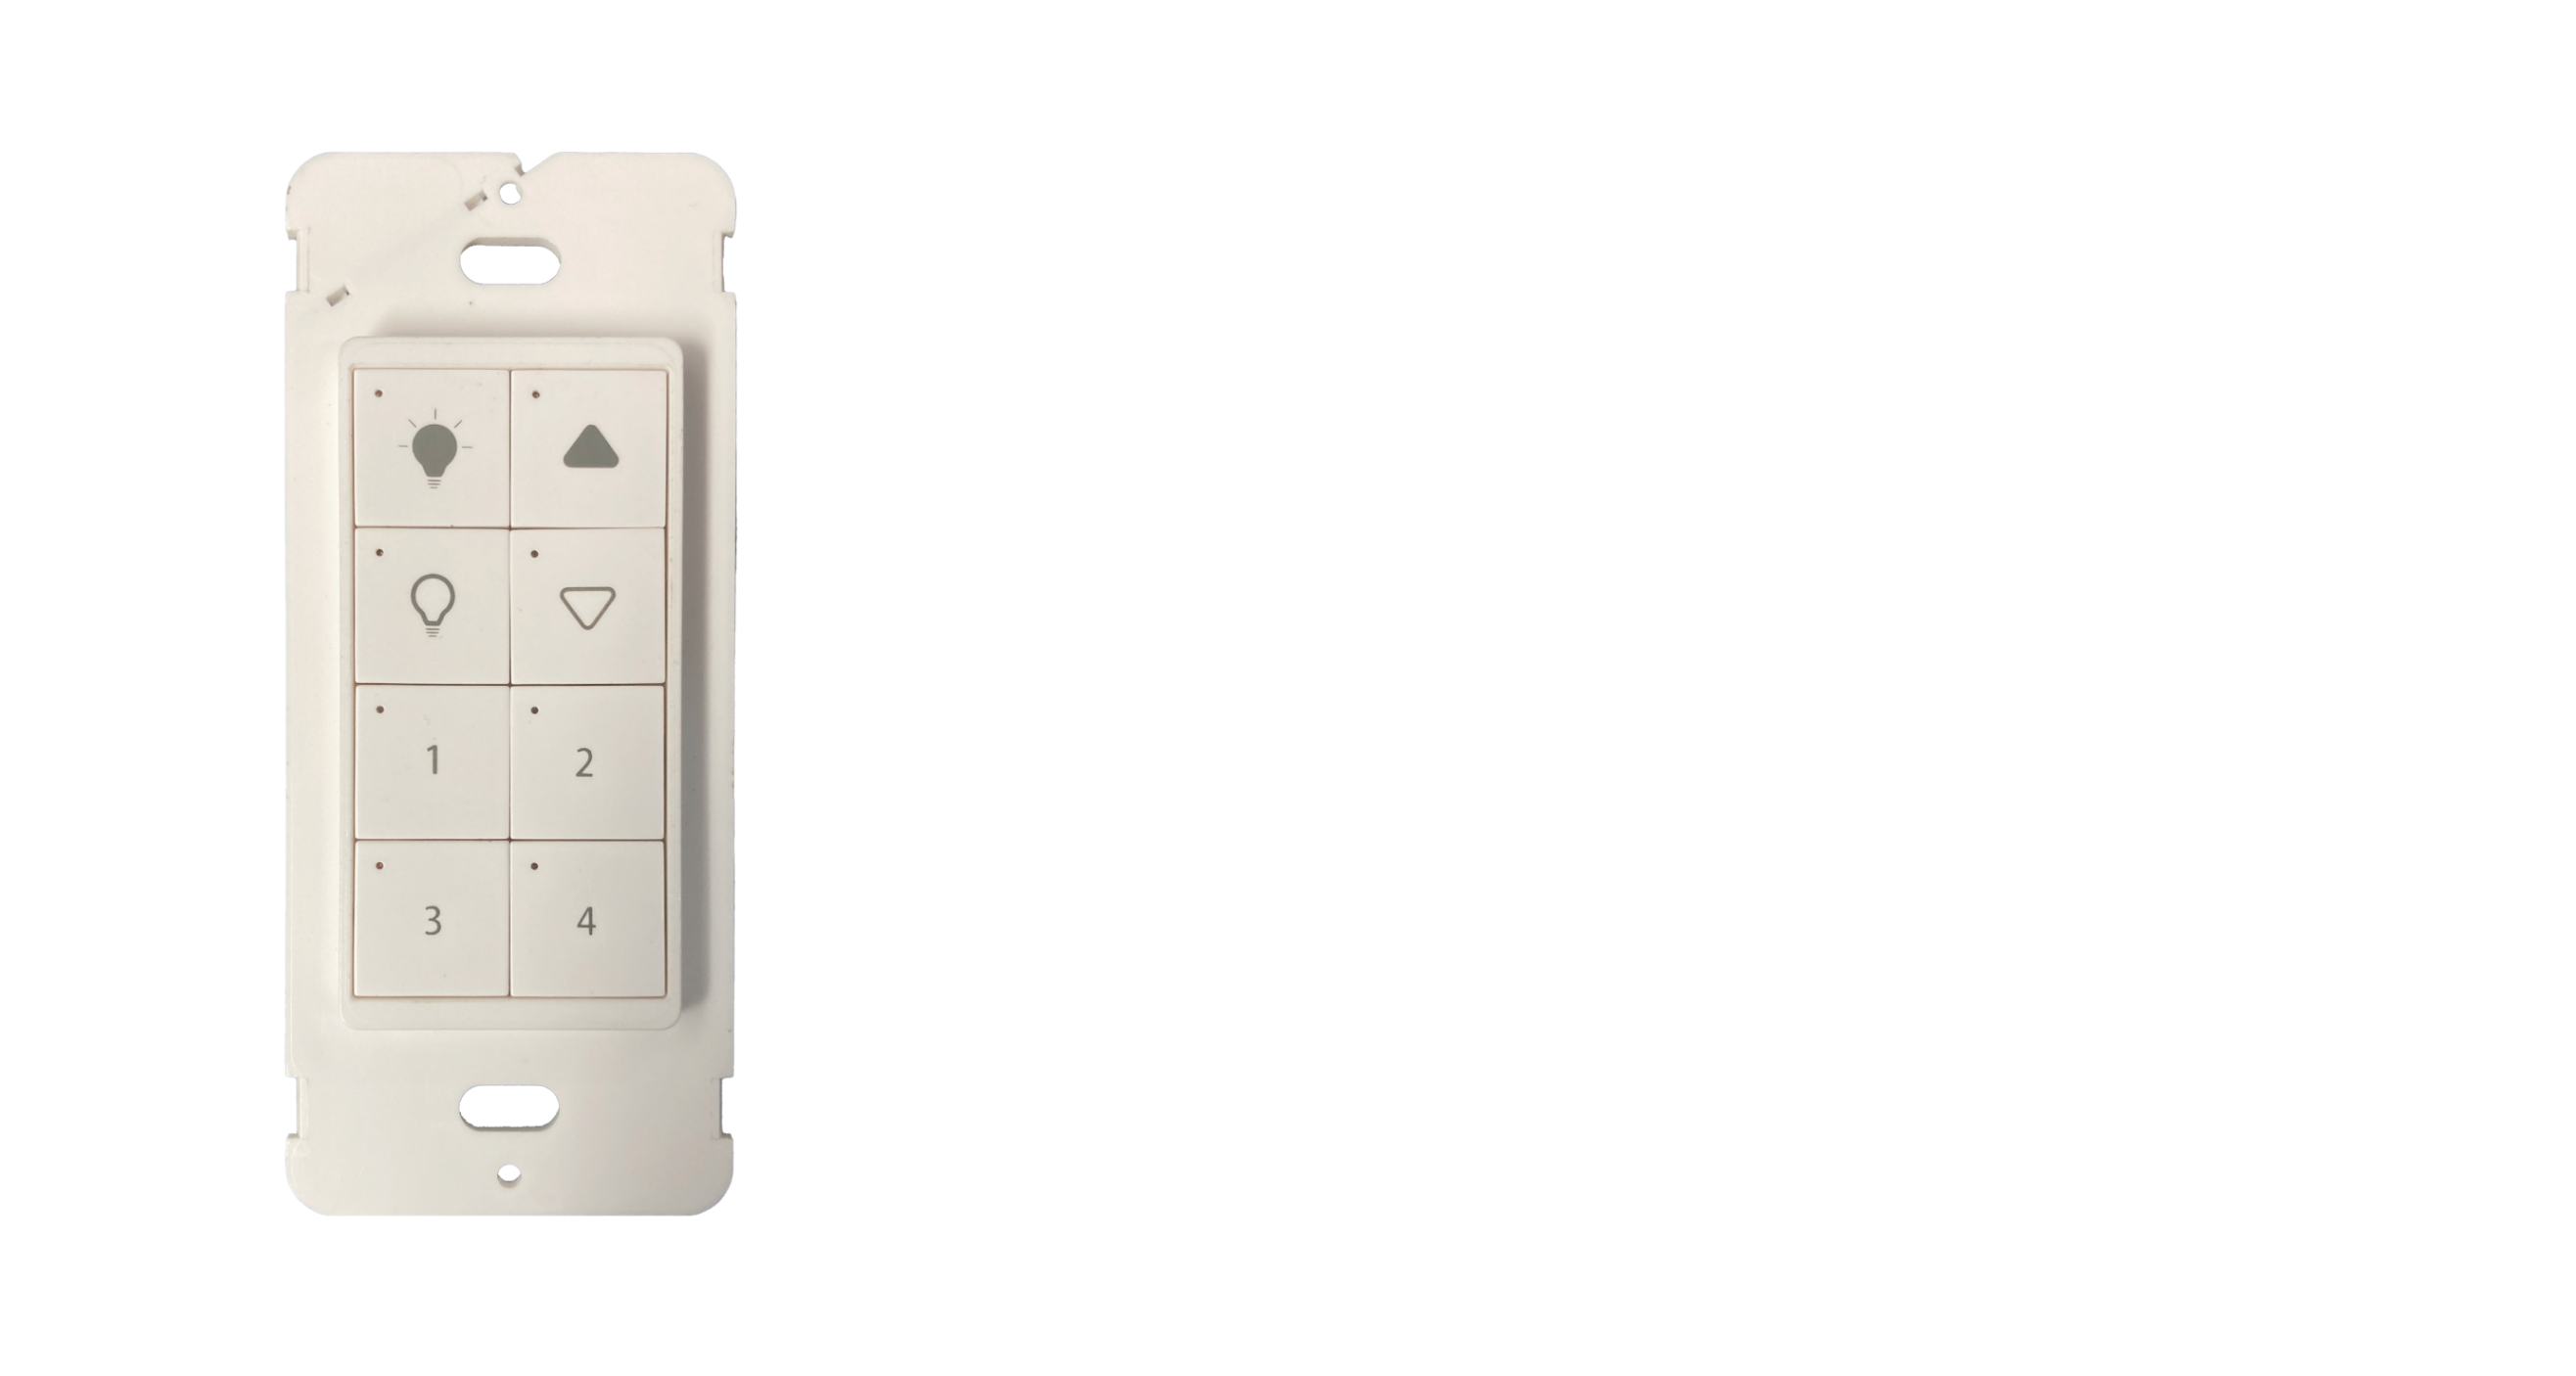 BLUETOOTH SMART 8 BUTTON PANEL